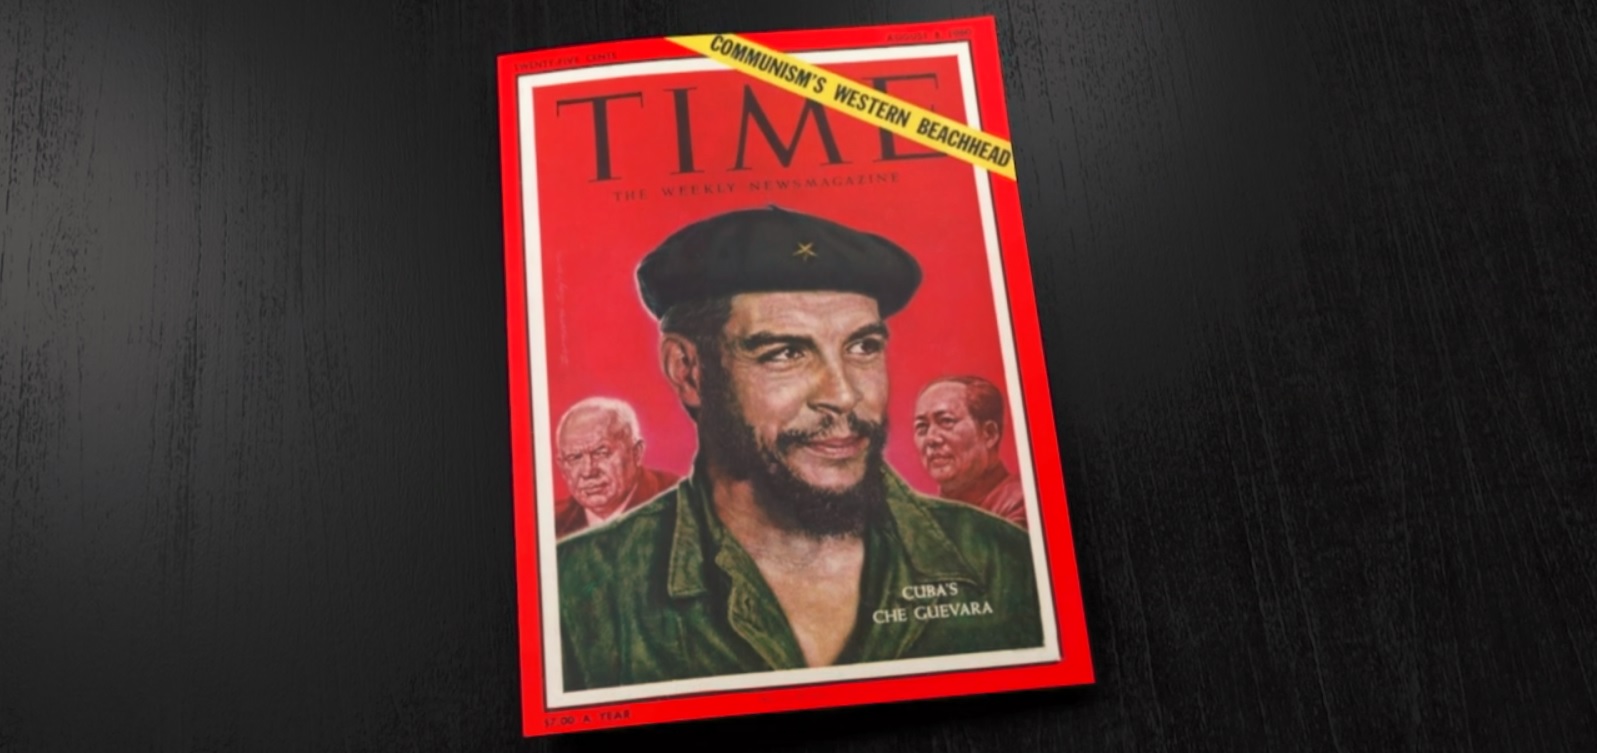 Che Guevara: Beyond the Myth (2017) [Documentary Review]